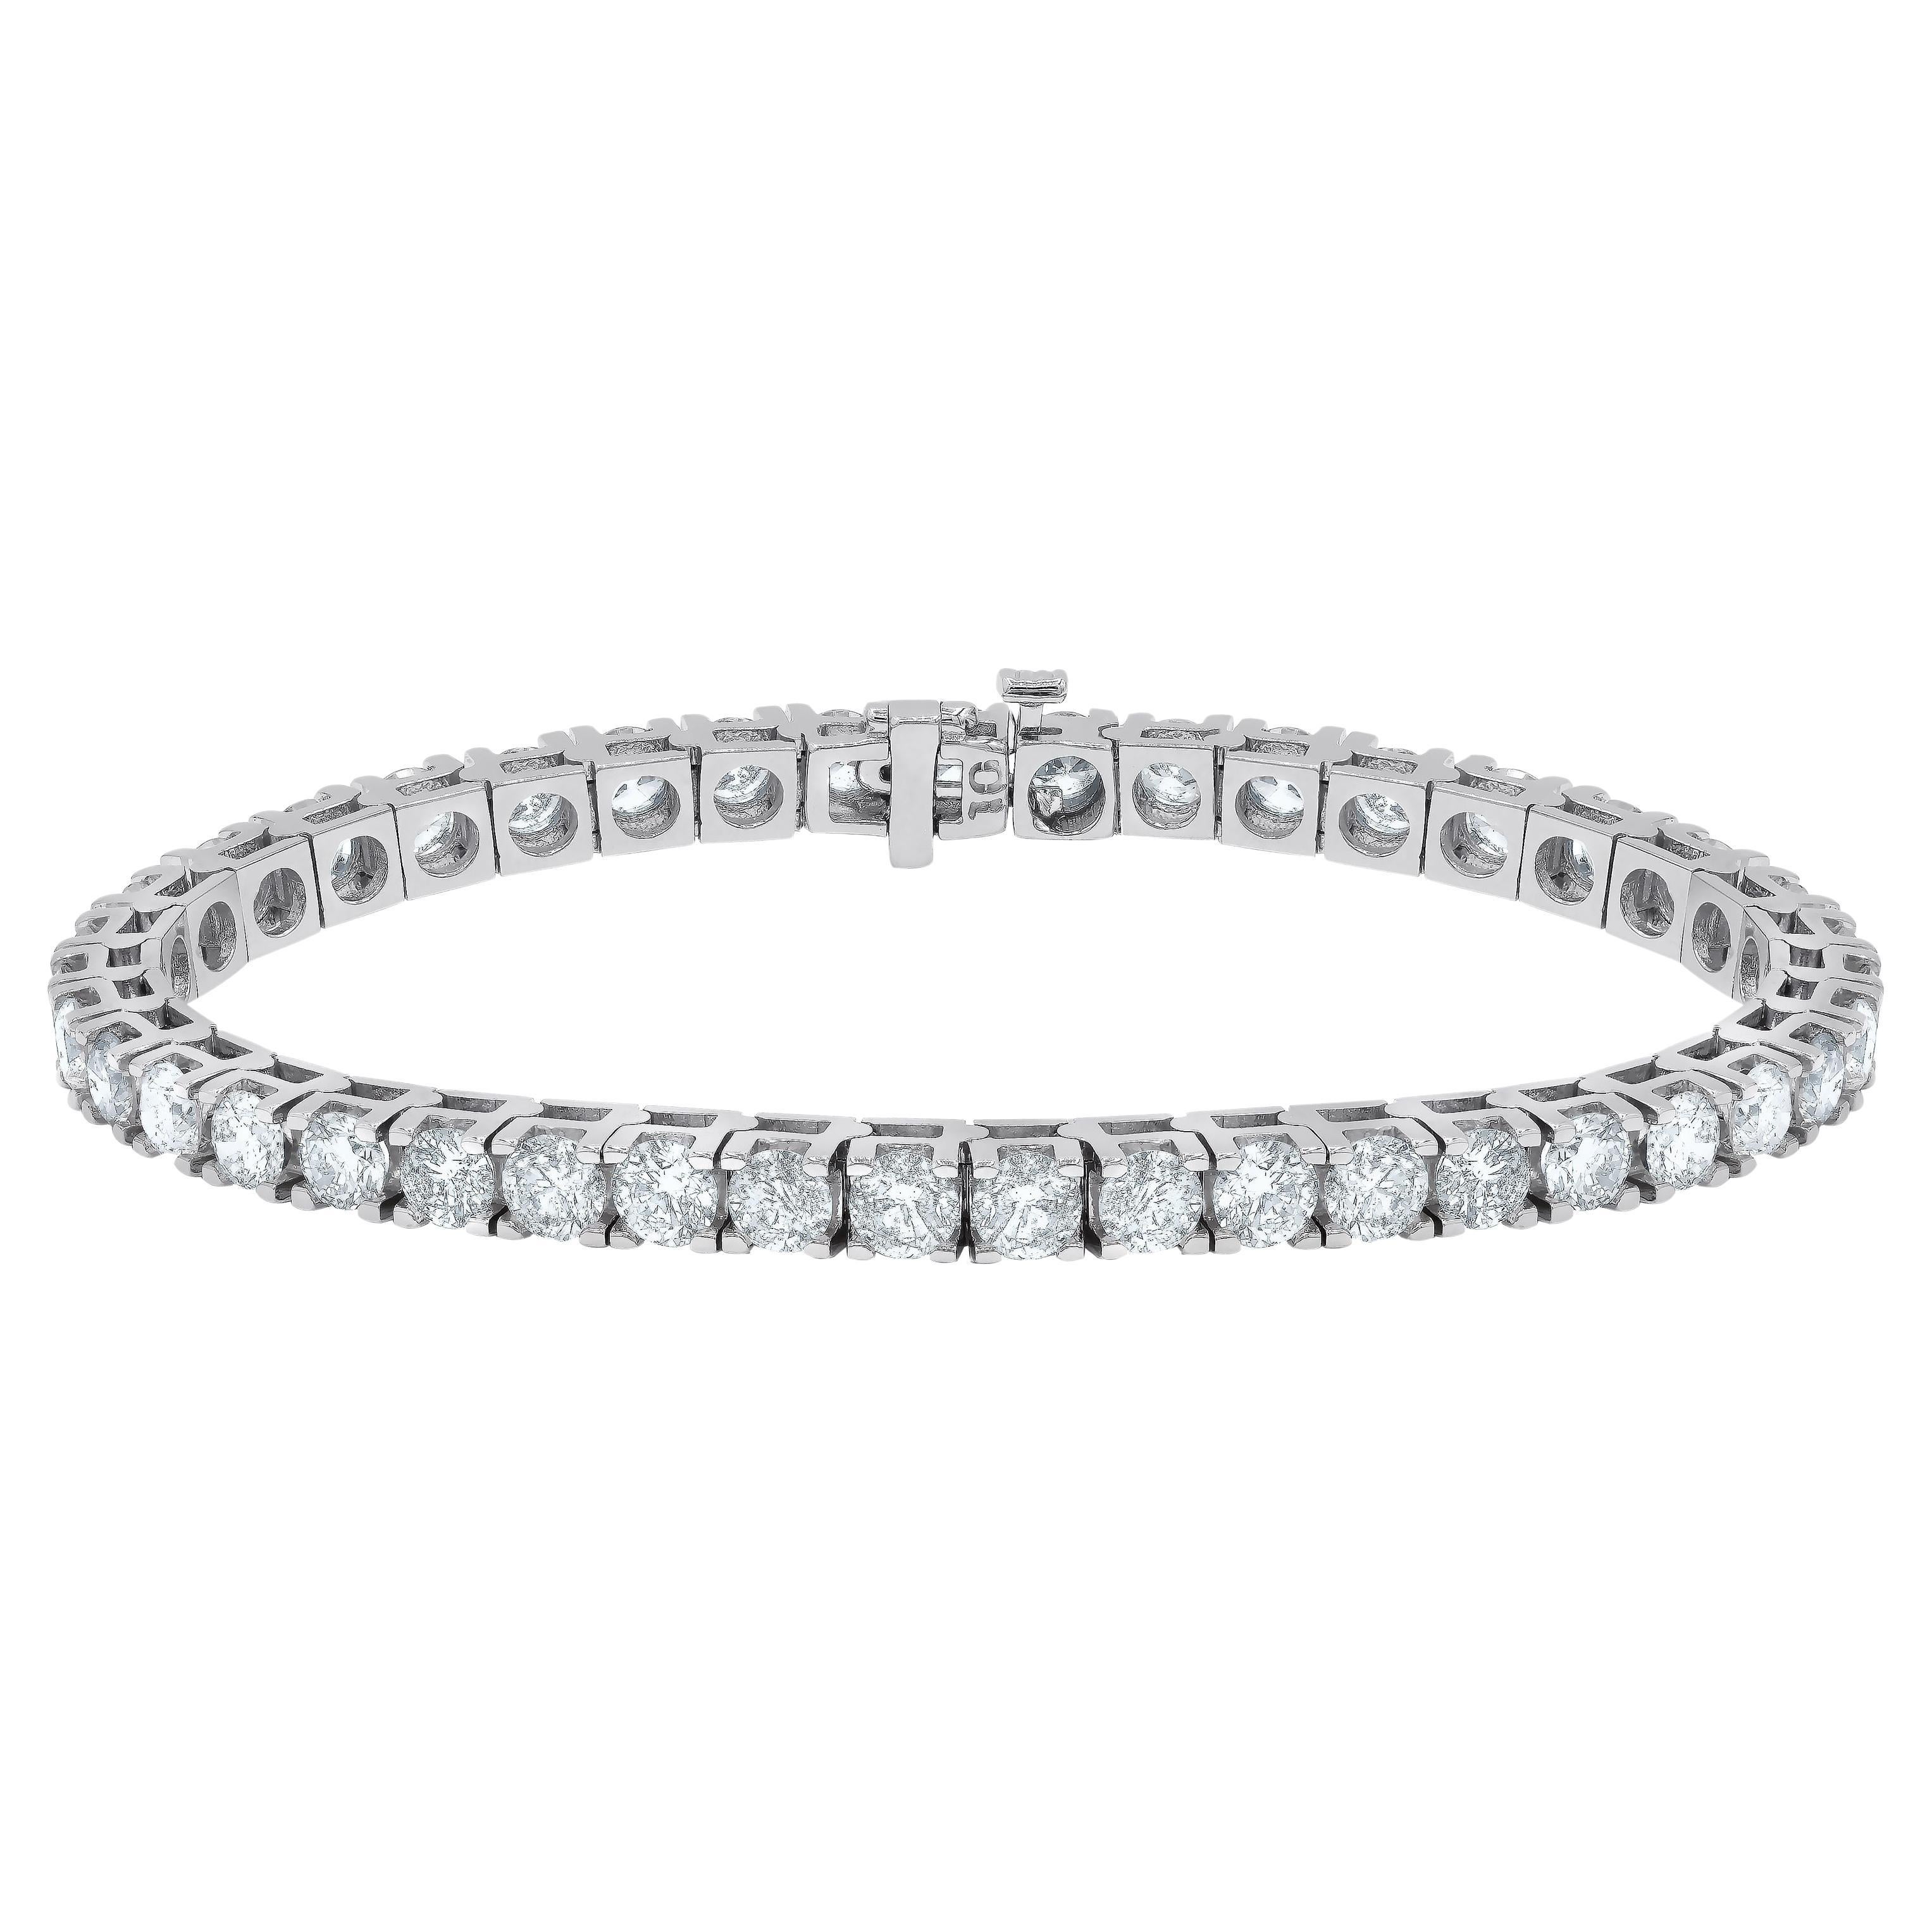 Diana M. Custom 14kt white gold tennis bracelet  4.59 cts round diamonds 